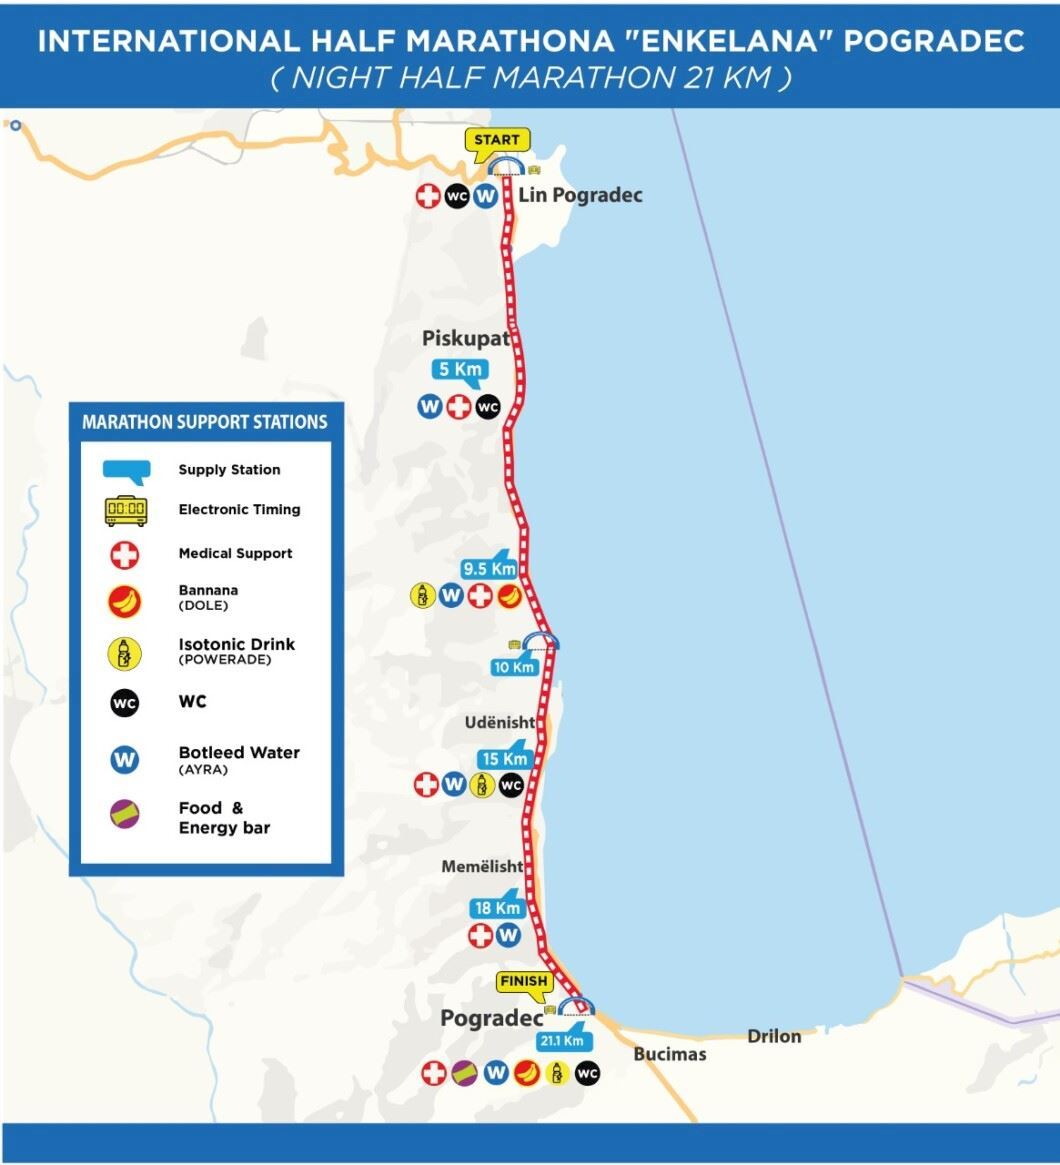 Night Half Marathon "Enkelana" in Pogradec Route Map